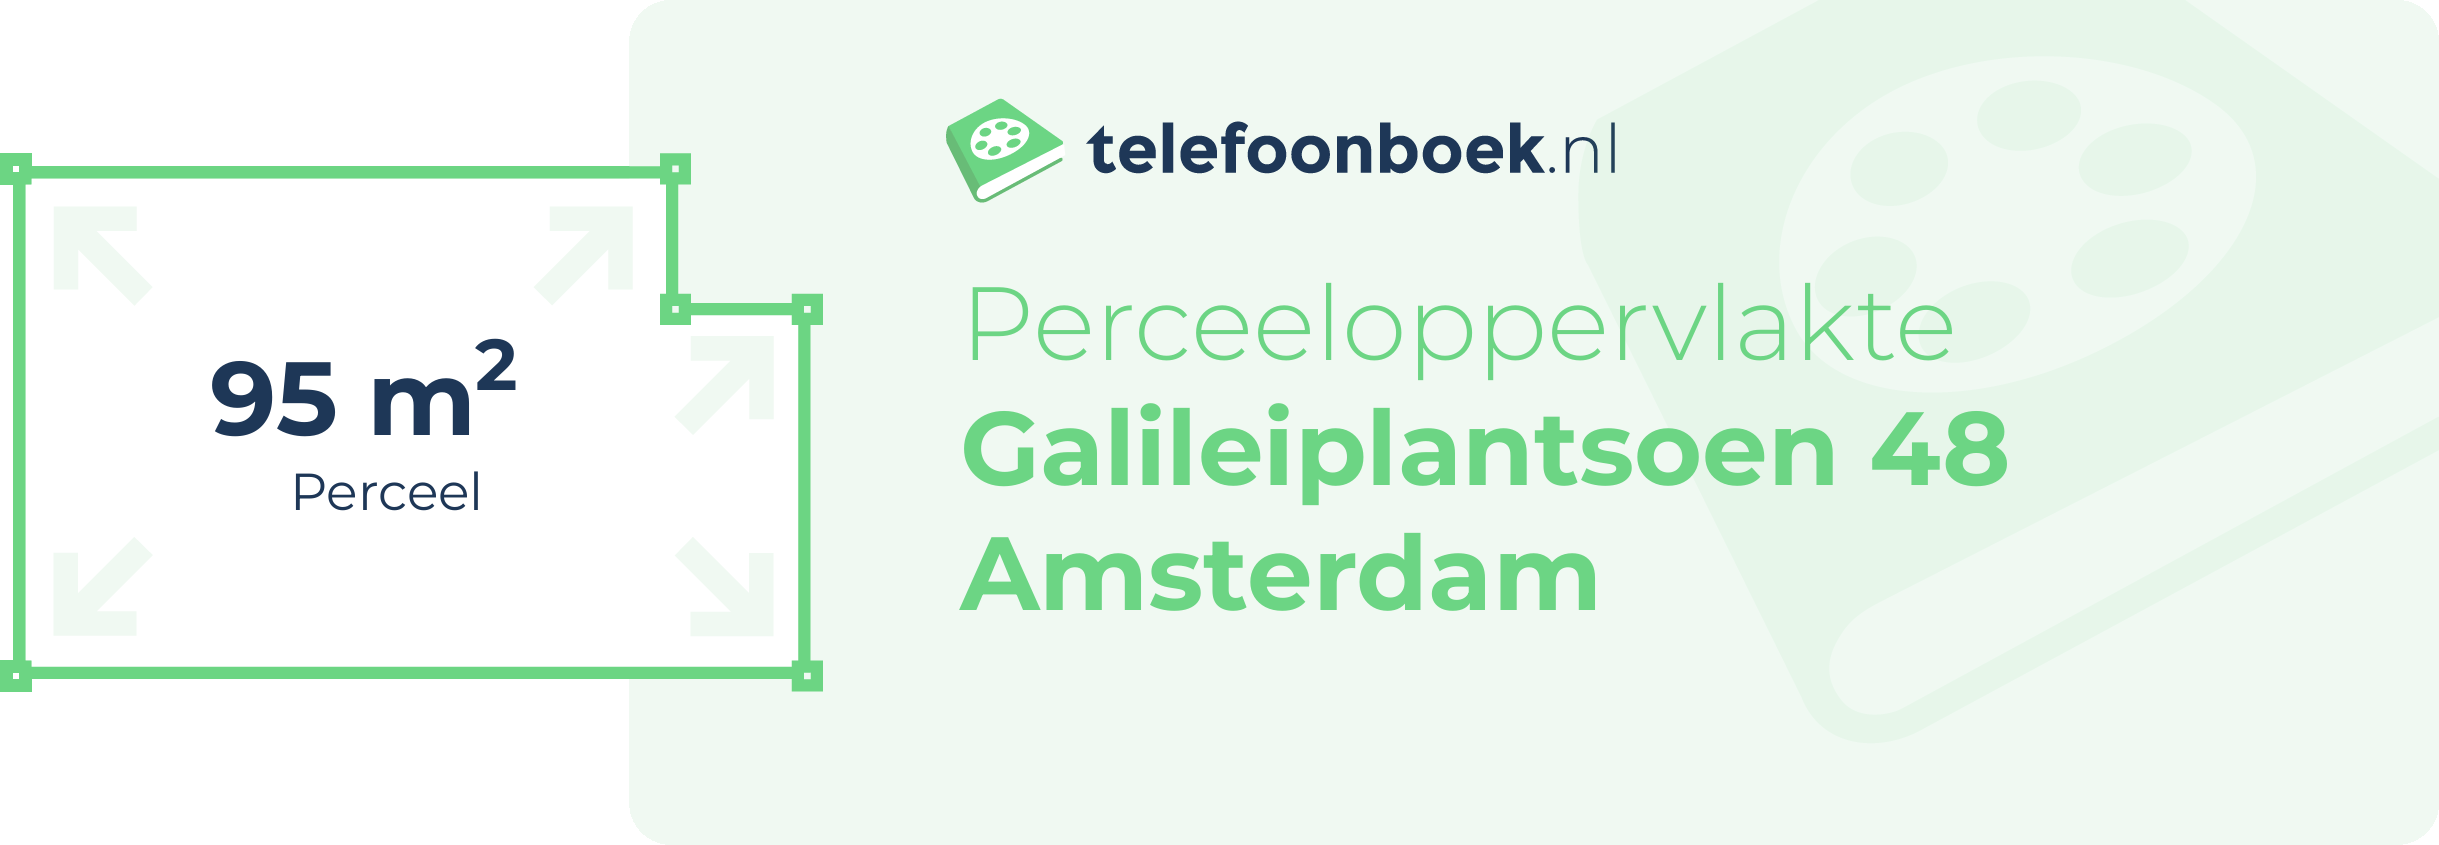 Perceeloppervlakte Galileiplantsoen 48 Amsterdam